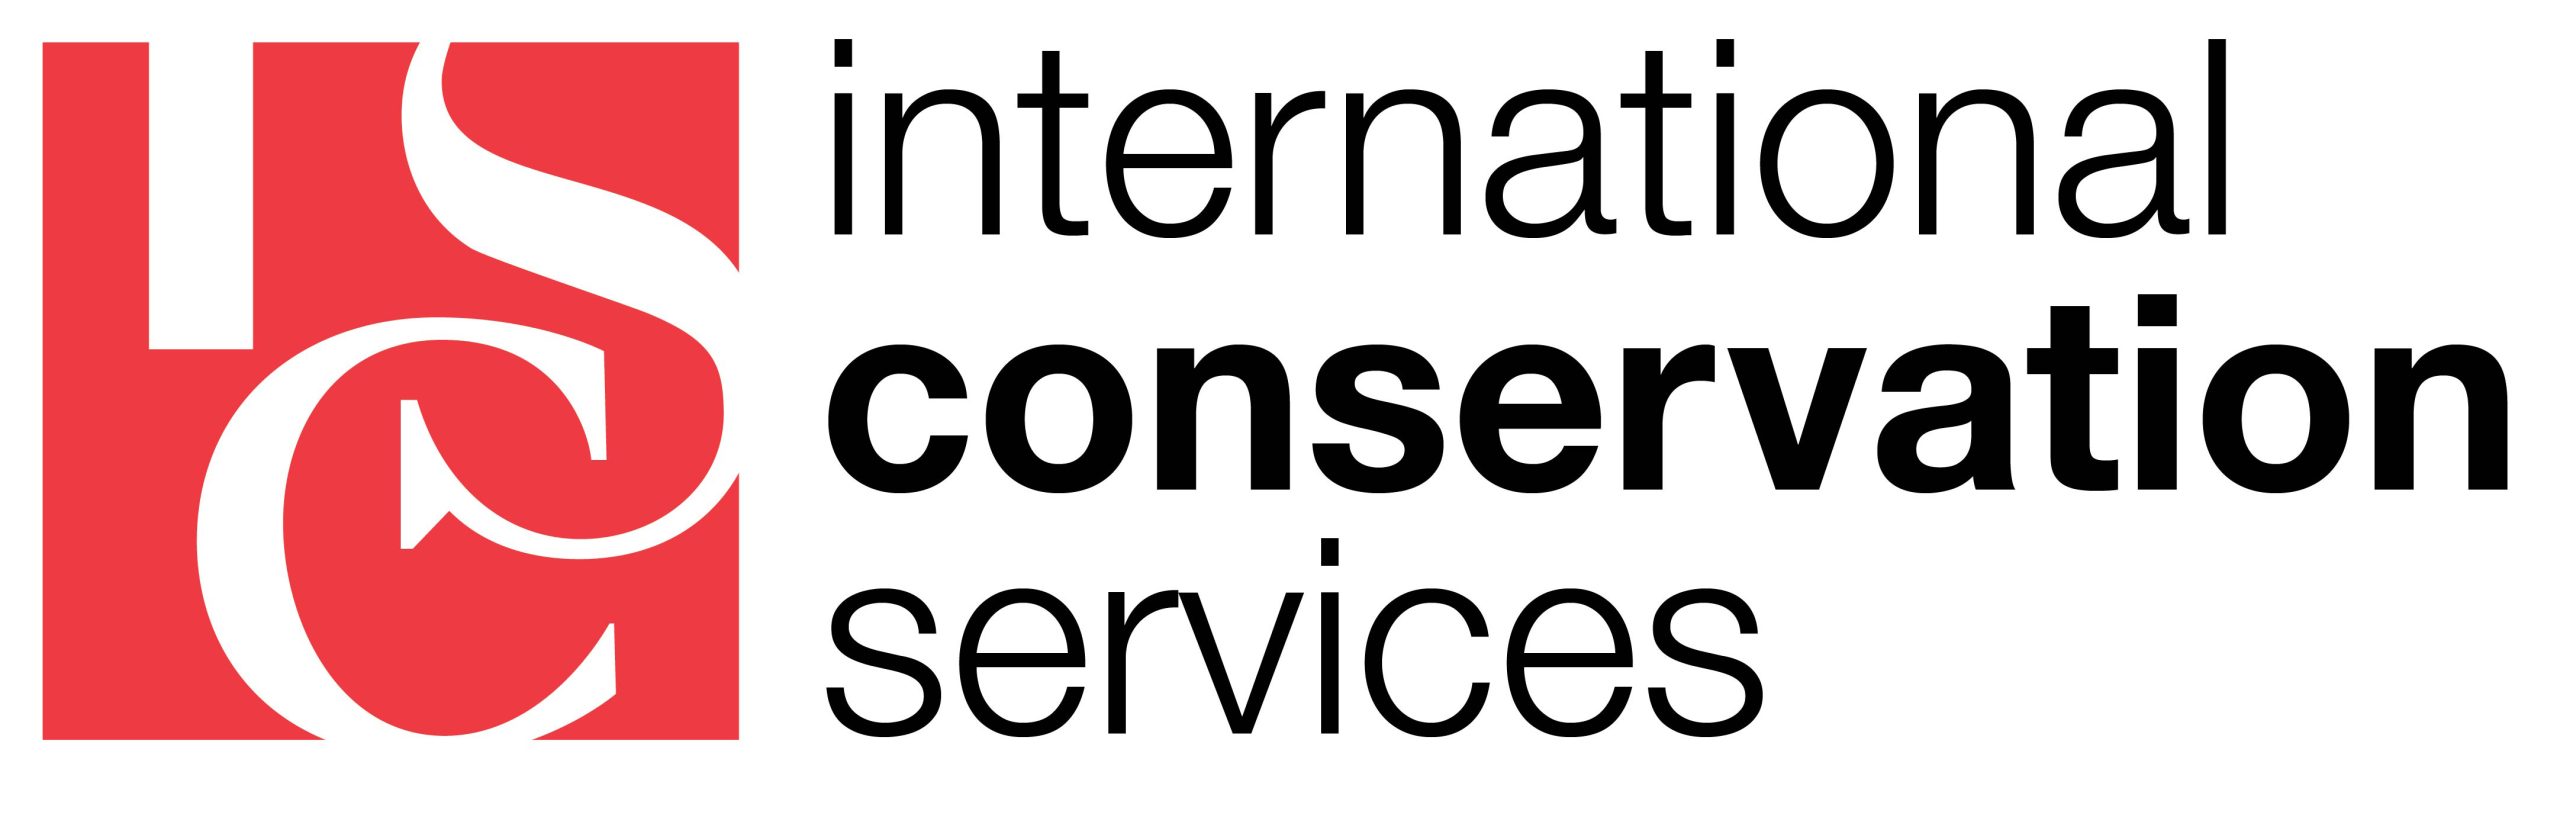 International Conservation services